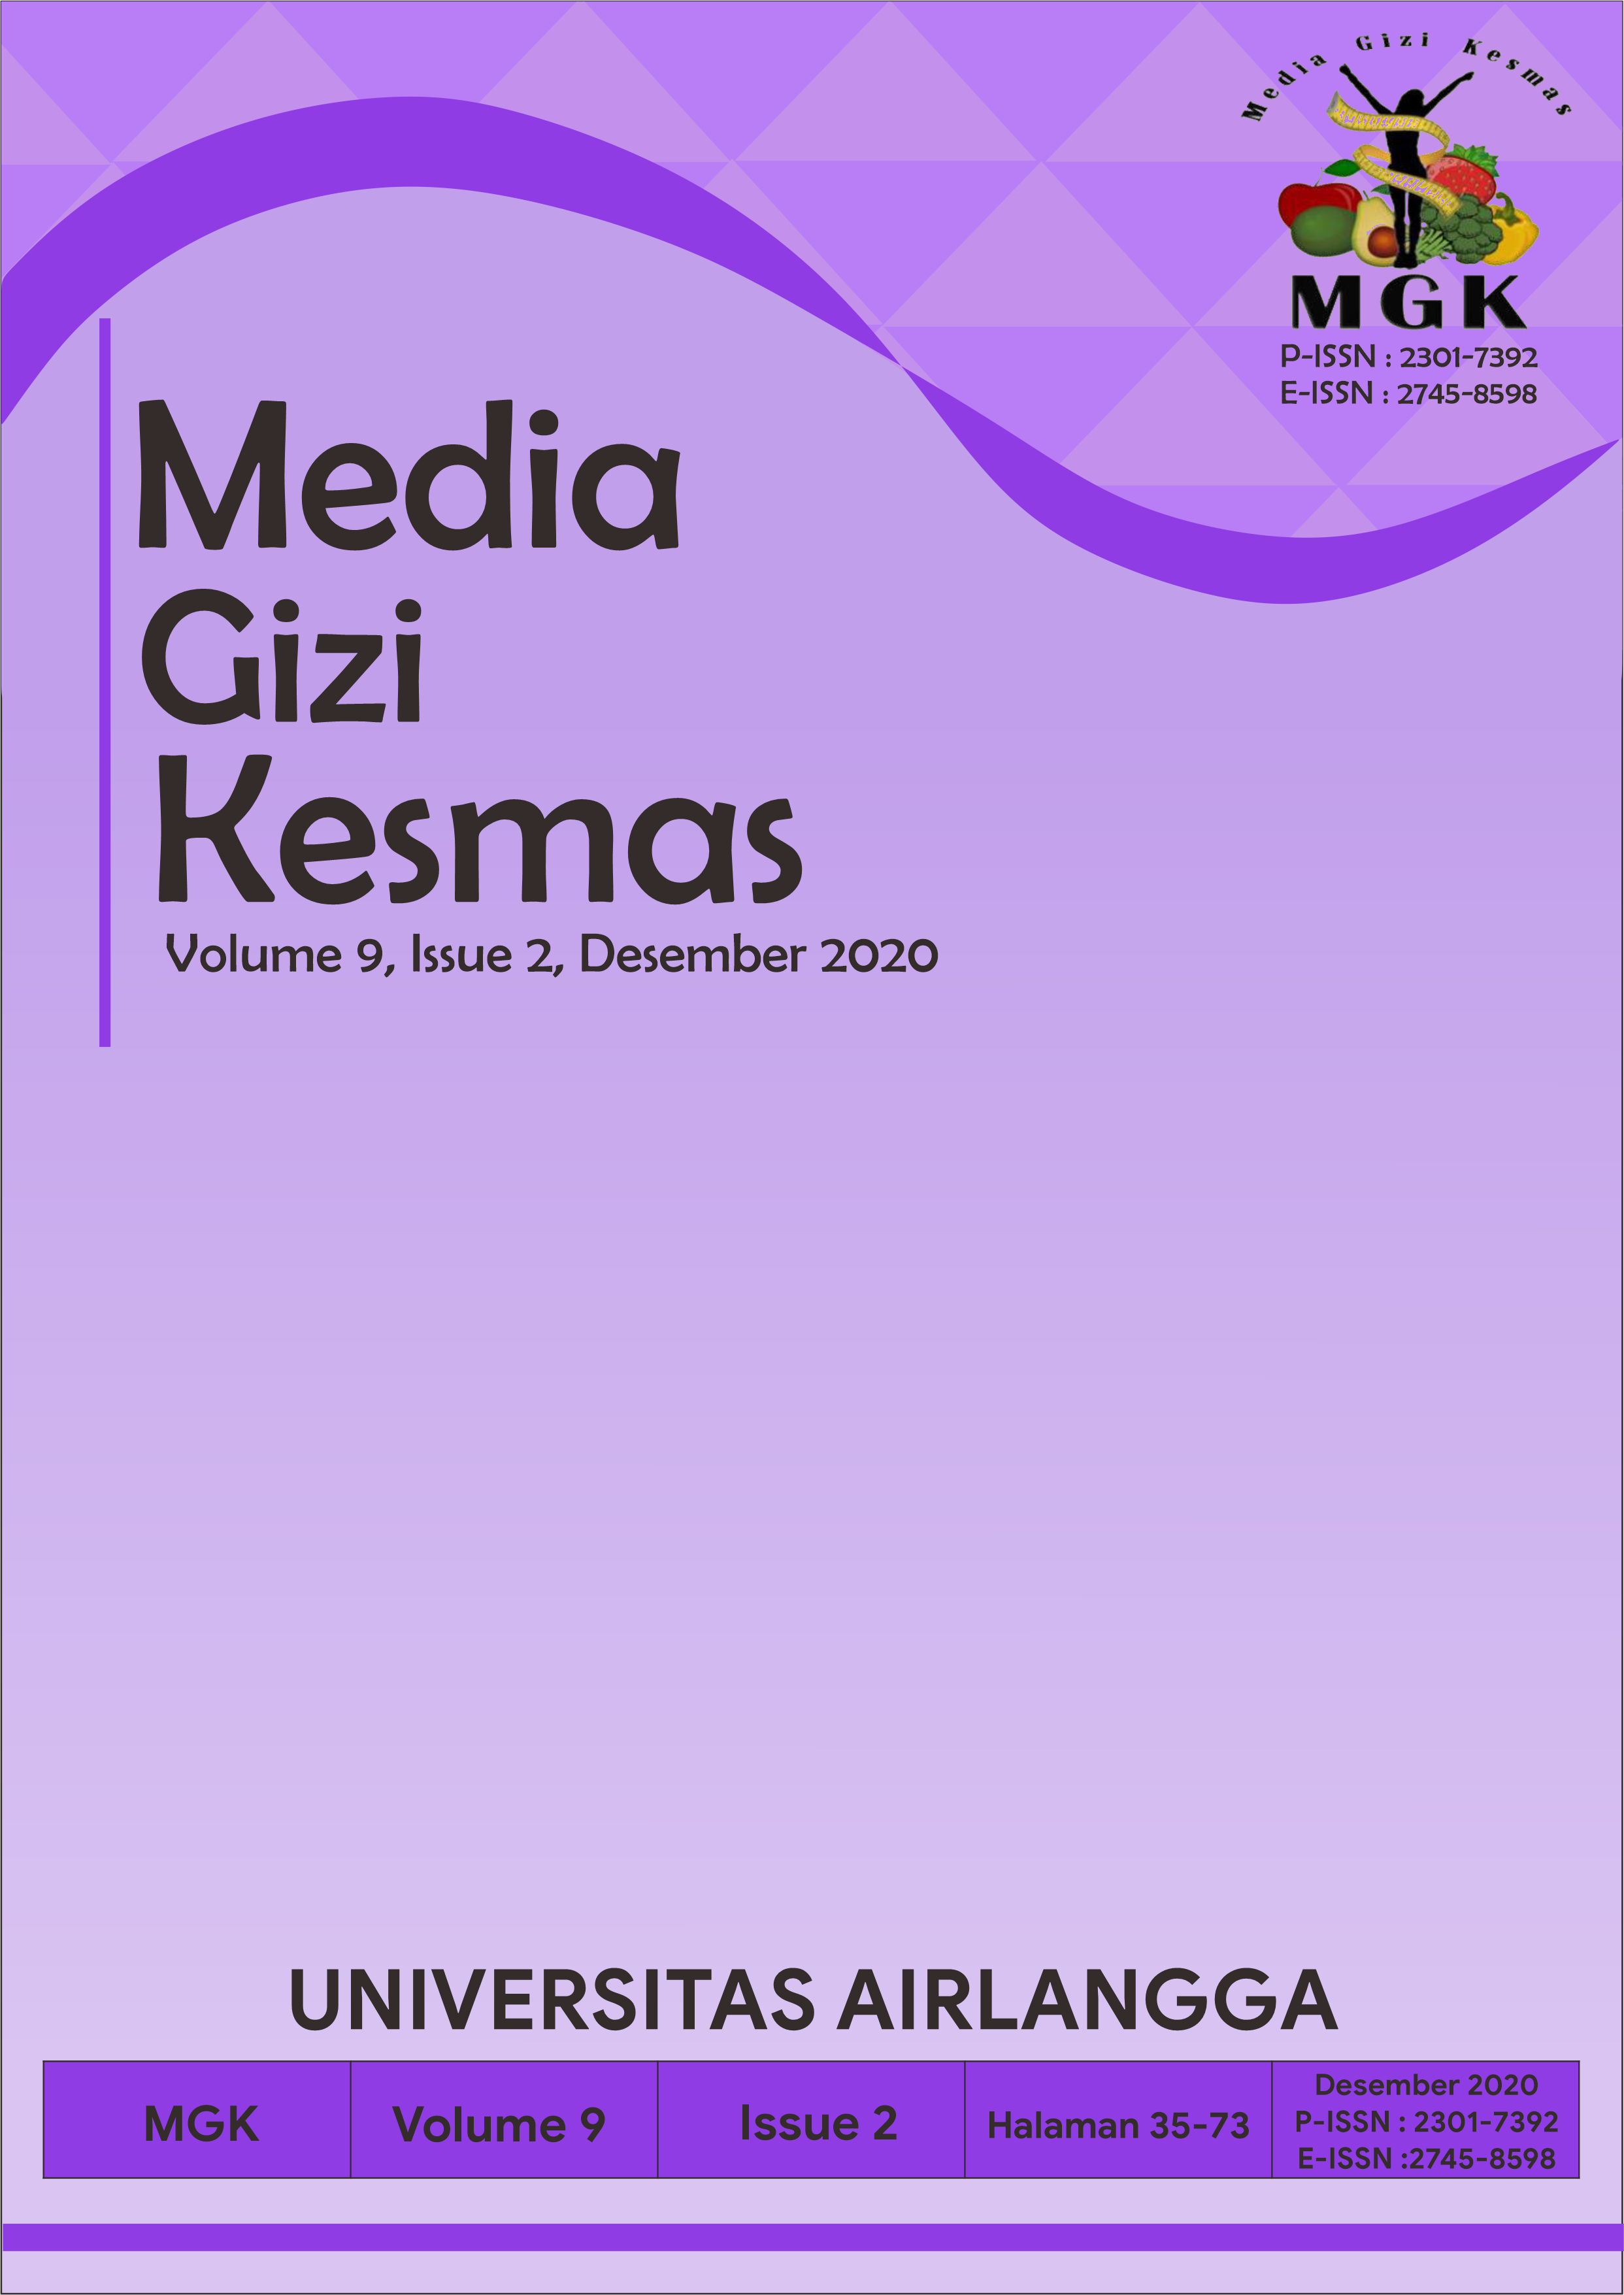 						View Vol. 9 No. 2 (2020): MEDIA GIZI KESMAS (DECEMBER 2020)
					